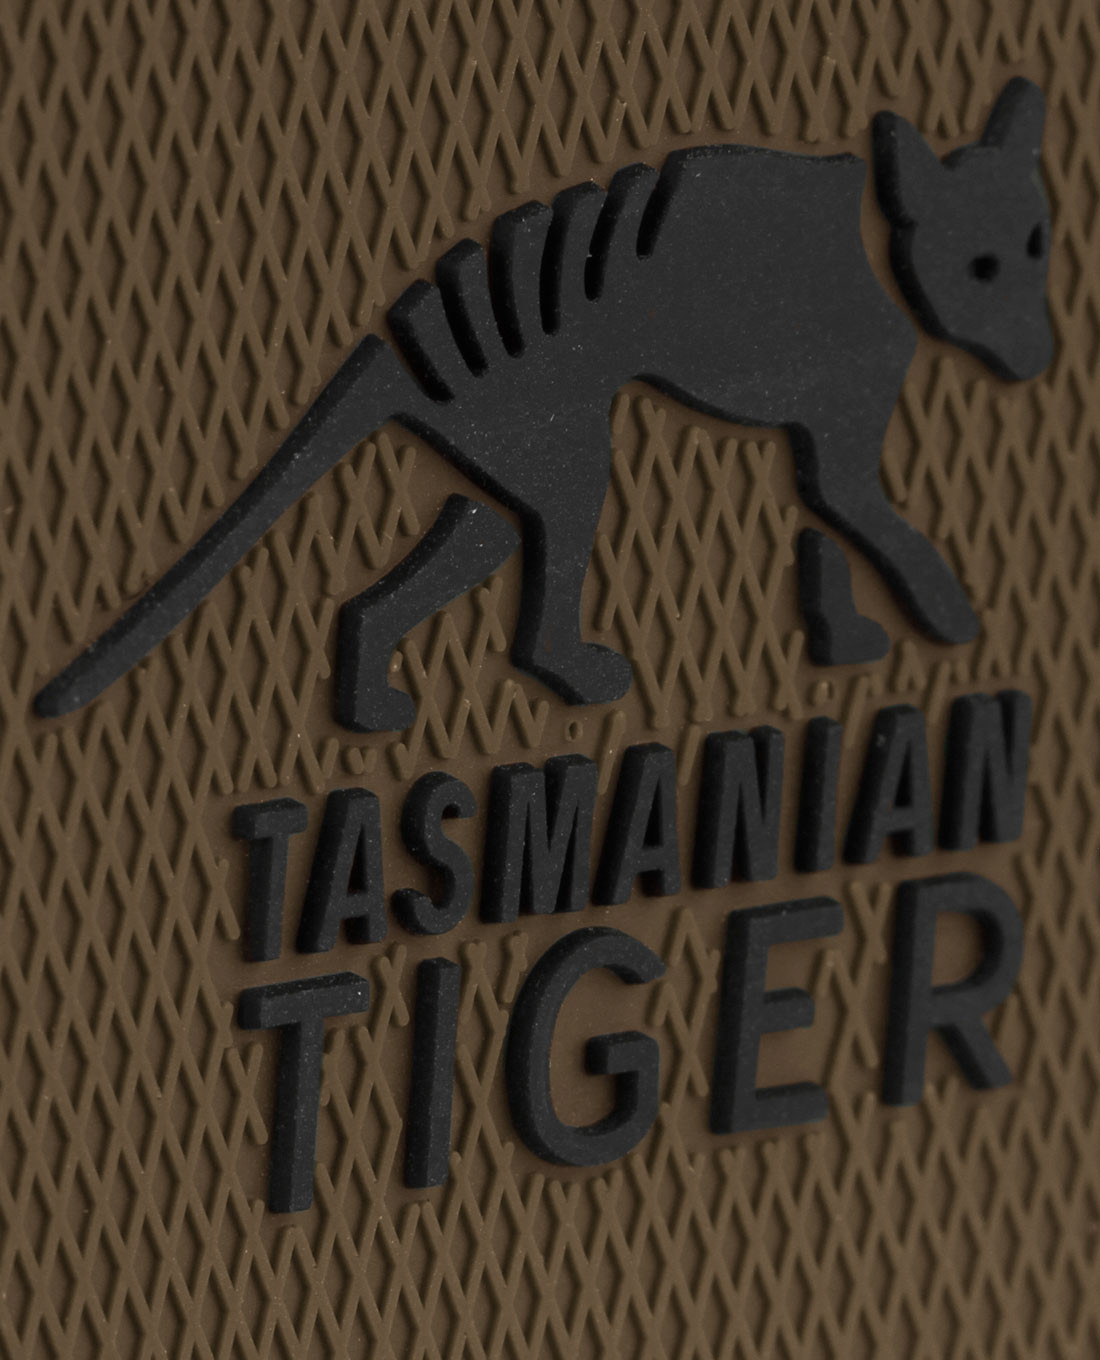 Tasmanian Tiger TT Patch Black Orange Marken-Logo PVC Klett-Patch 3D Optik